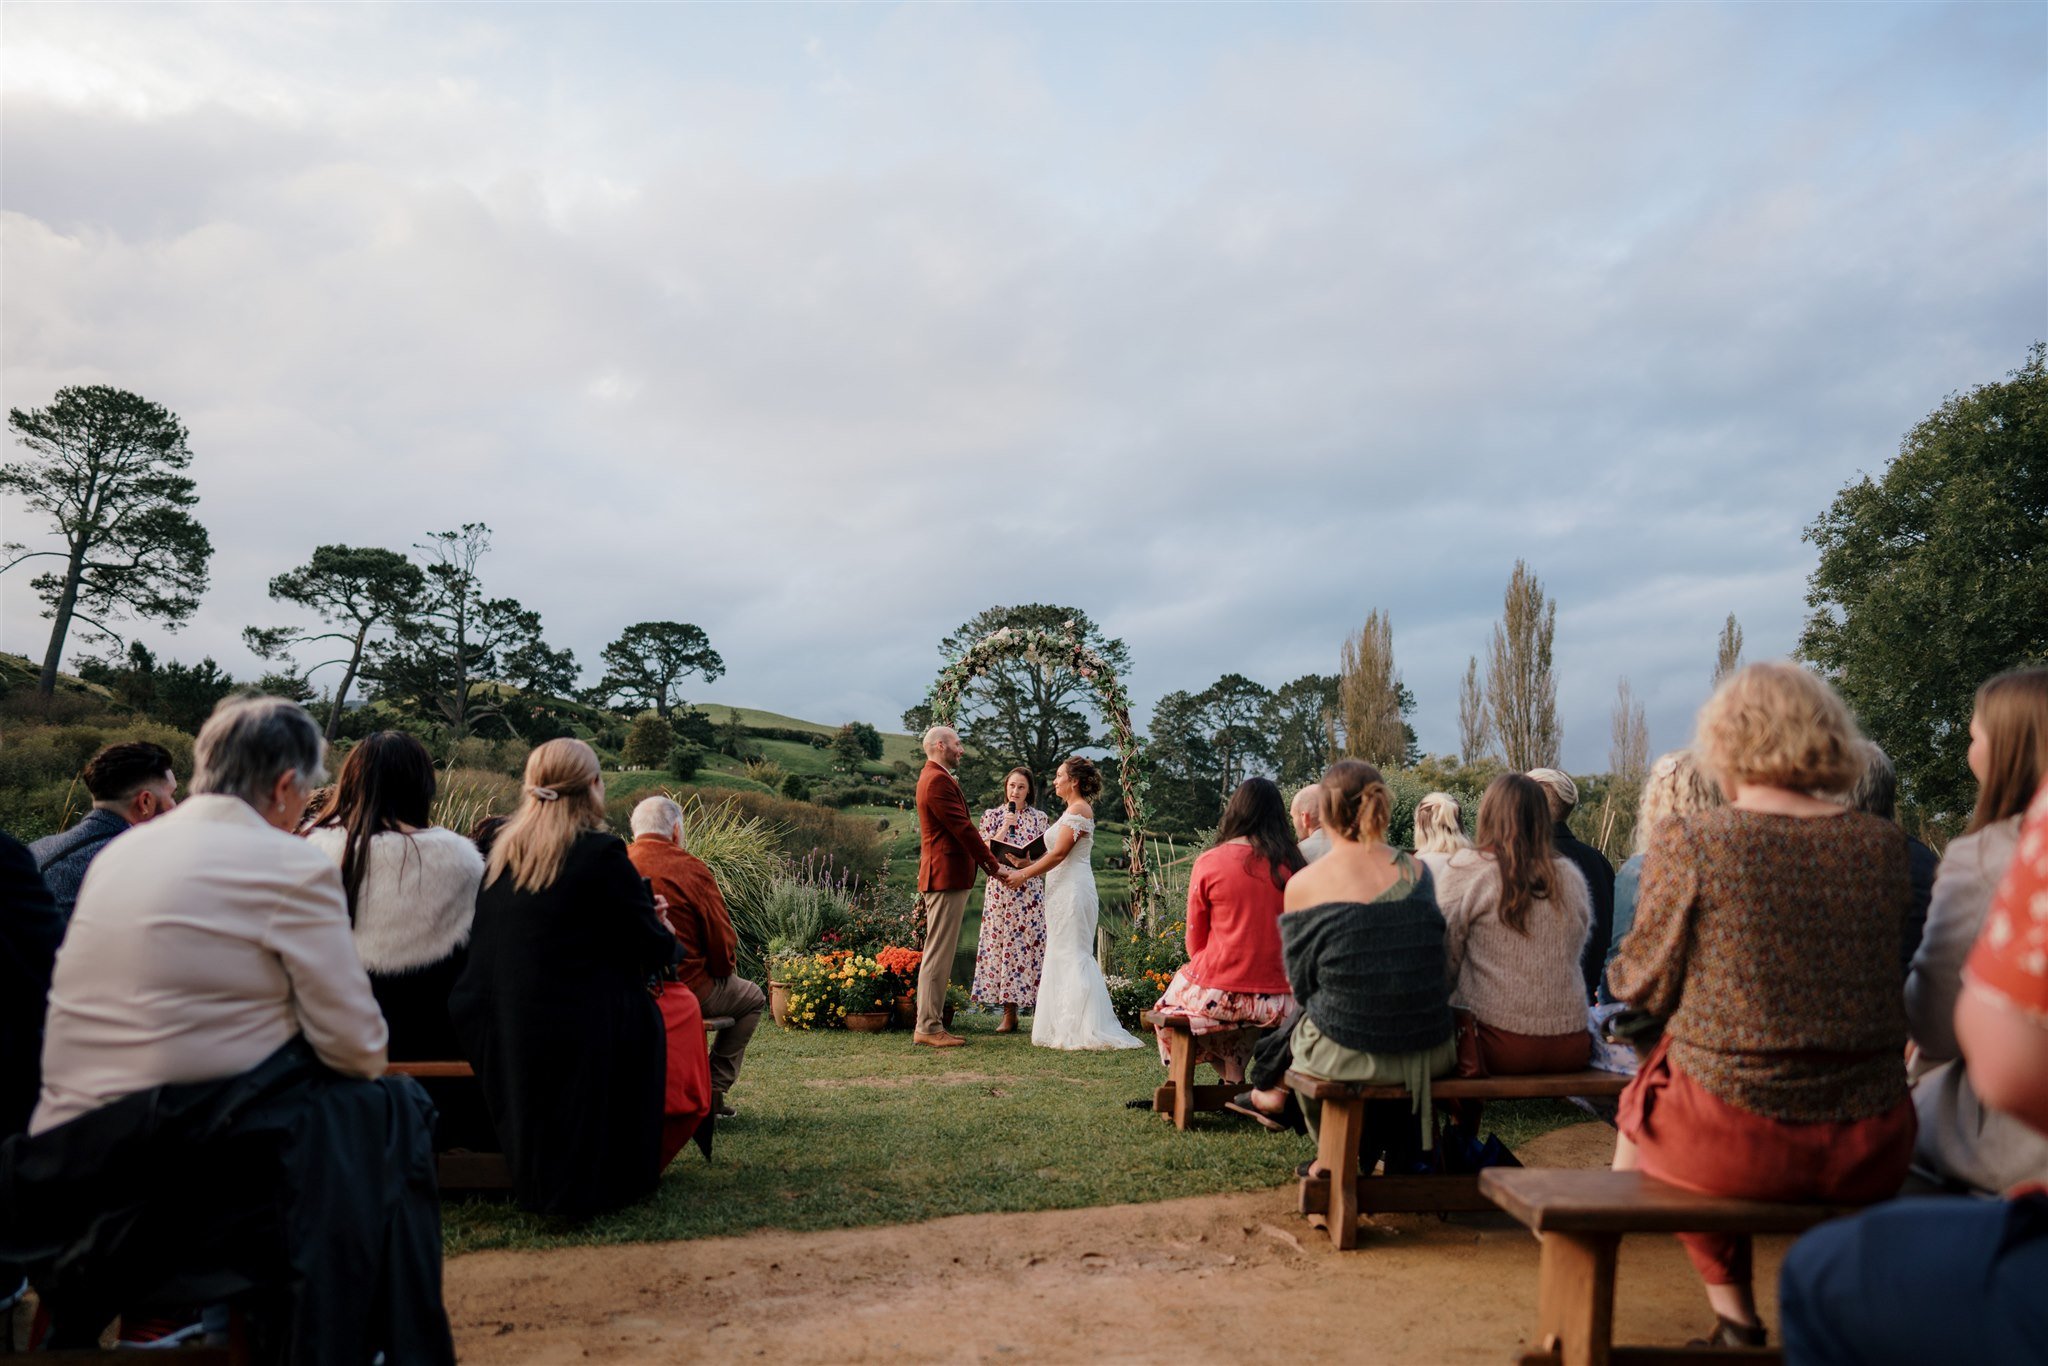 Matamata wedding venue | Hobbiton Tour | Auckland Wedding Videographer| Best Photographer| Top Videography | Wedding Ceremony Photography | The Green Dragon Inn | Dear White Productions